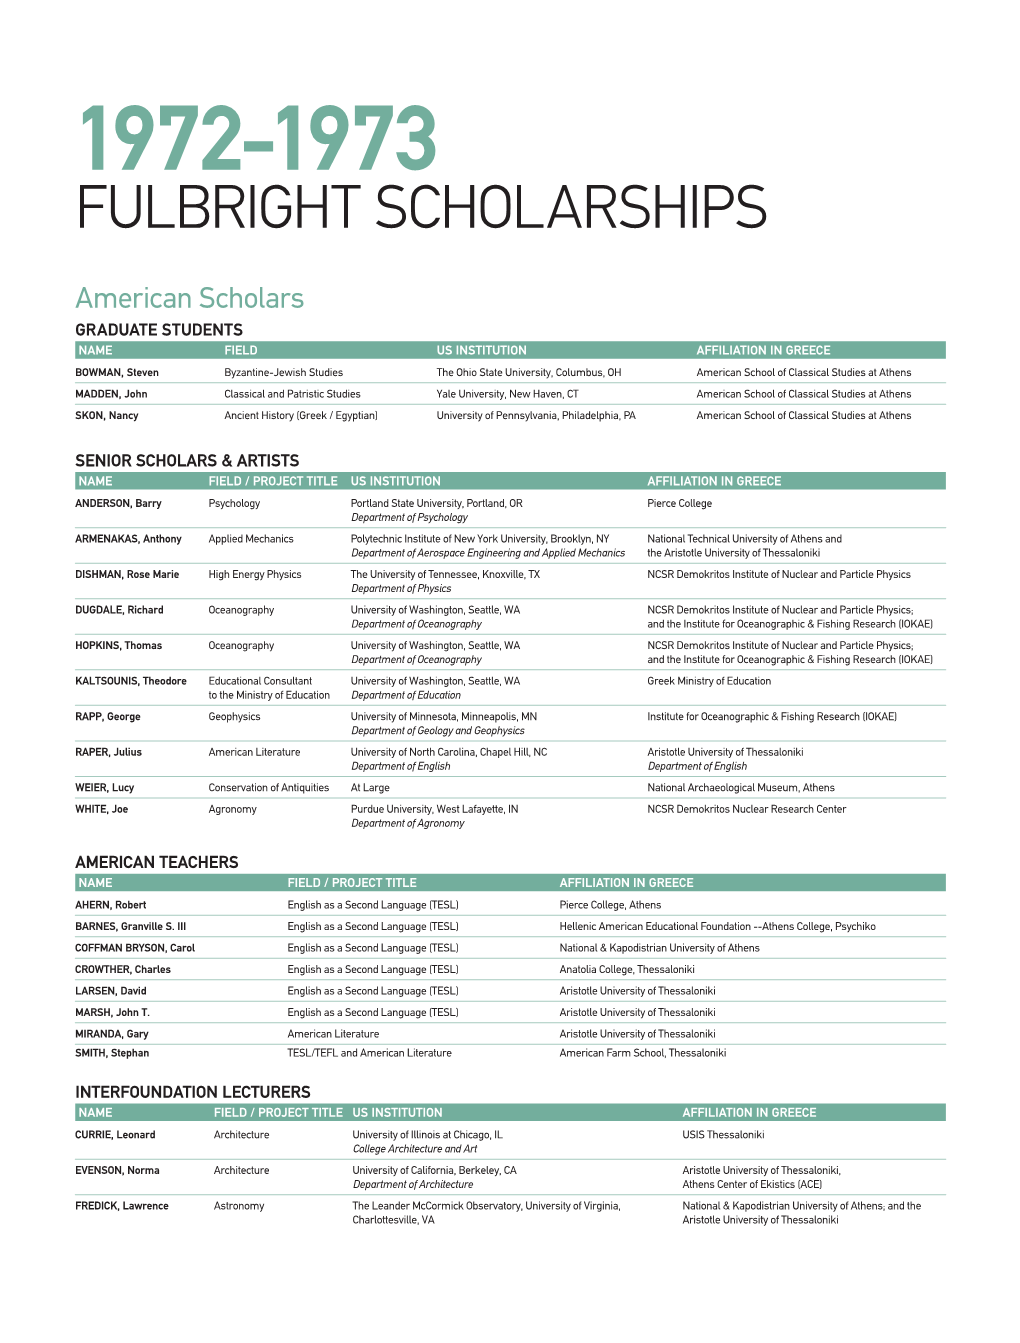 1972-1973 Fulbright Scholarships